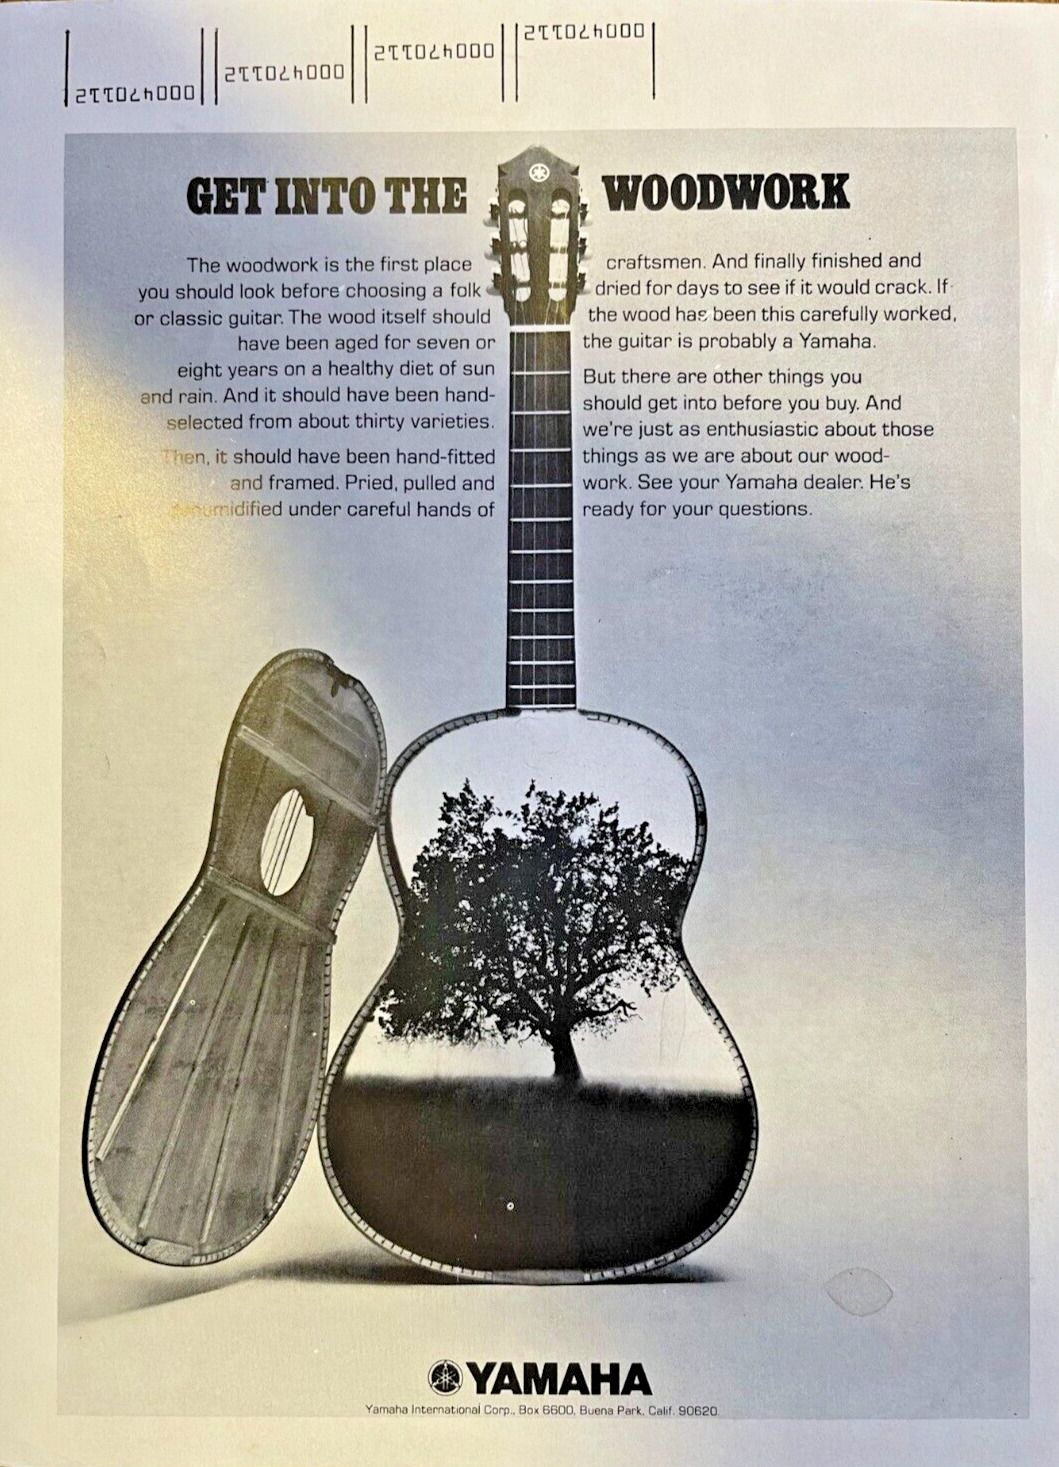 1974 Vintage Magazine Advertisement Yamaha Guitars Get Into The Woodwork